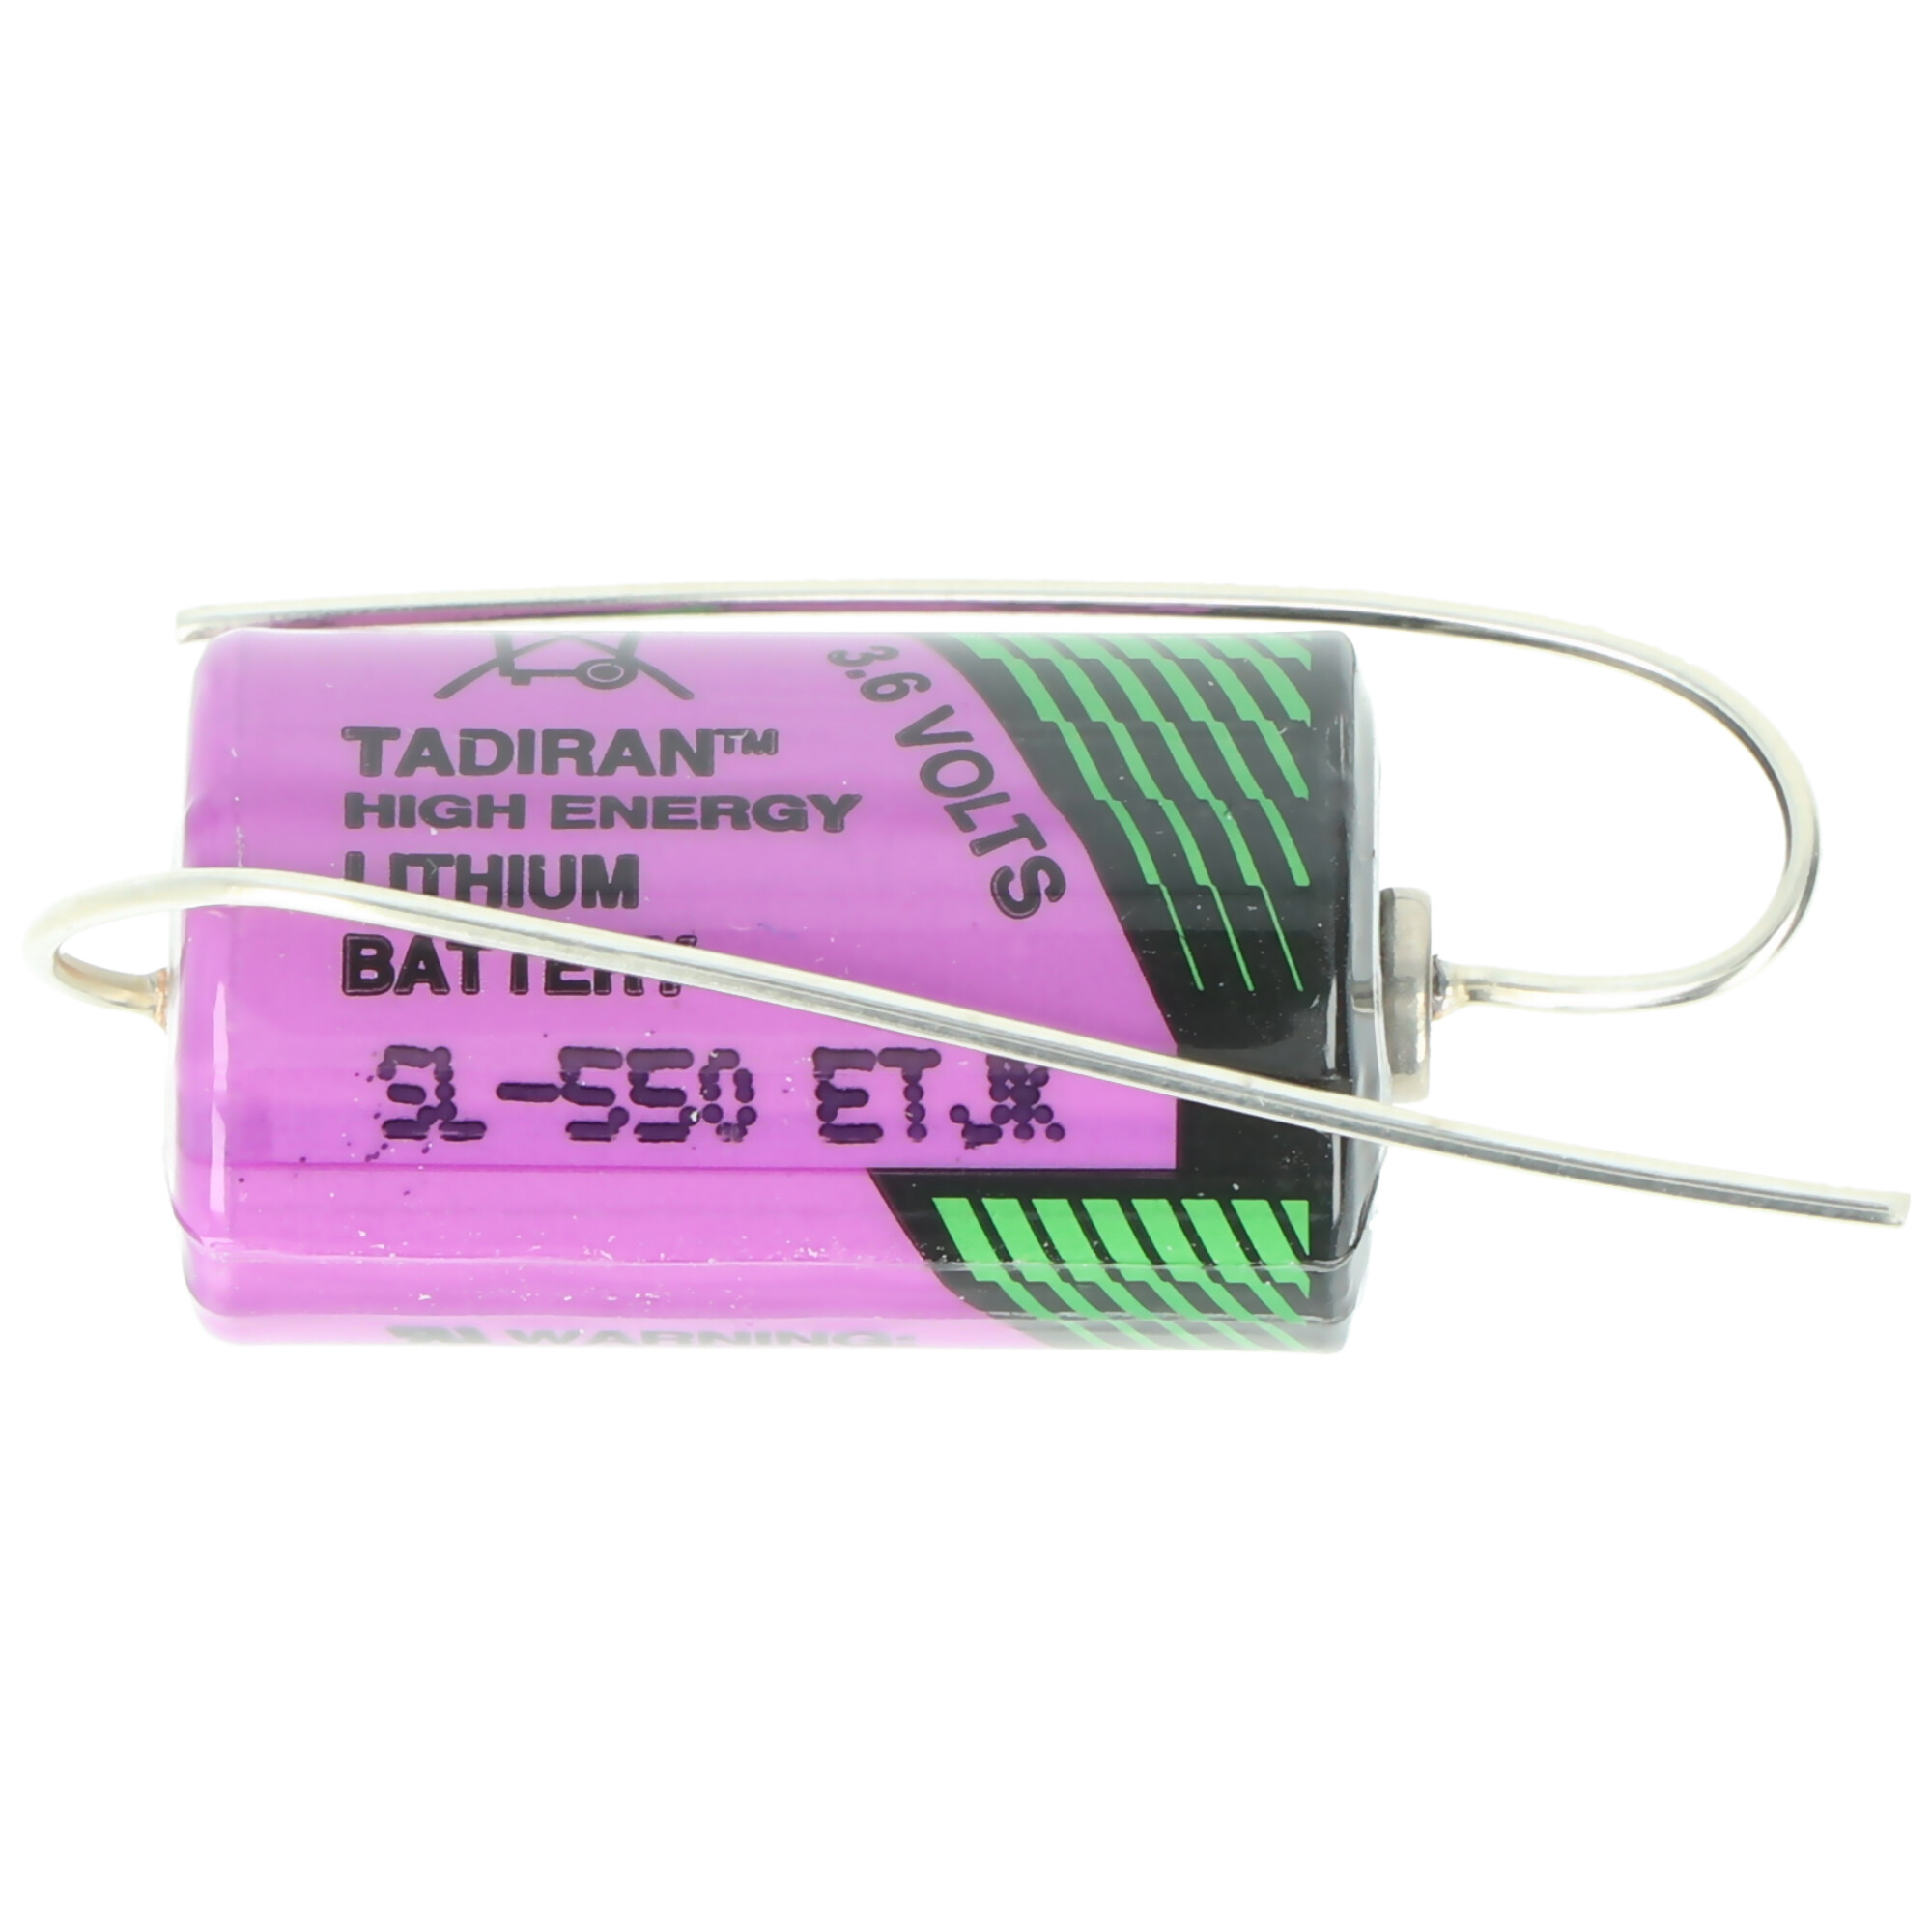 Tadiran LTC SL-550/P, Herst.Nr: 1110550300 mit axialem Drahtanschluss